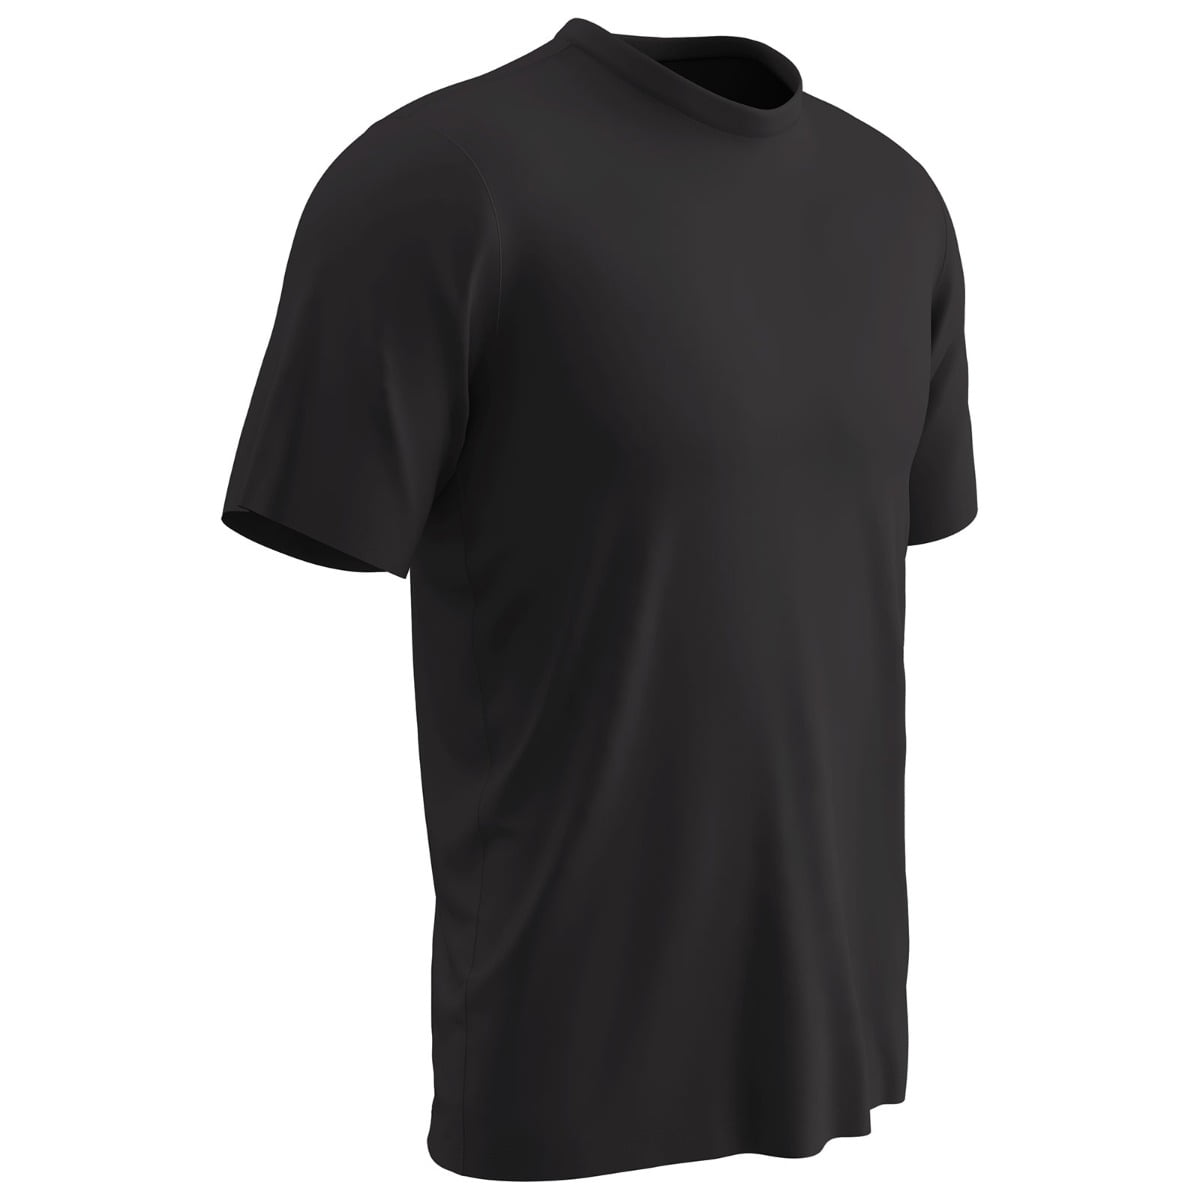 Champro Men's Vision T-Shirt Jersey - Walmart.com